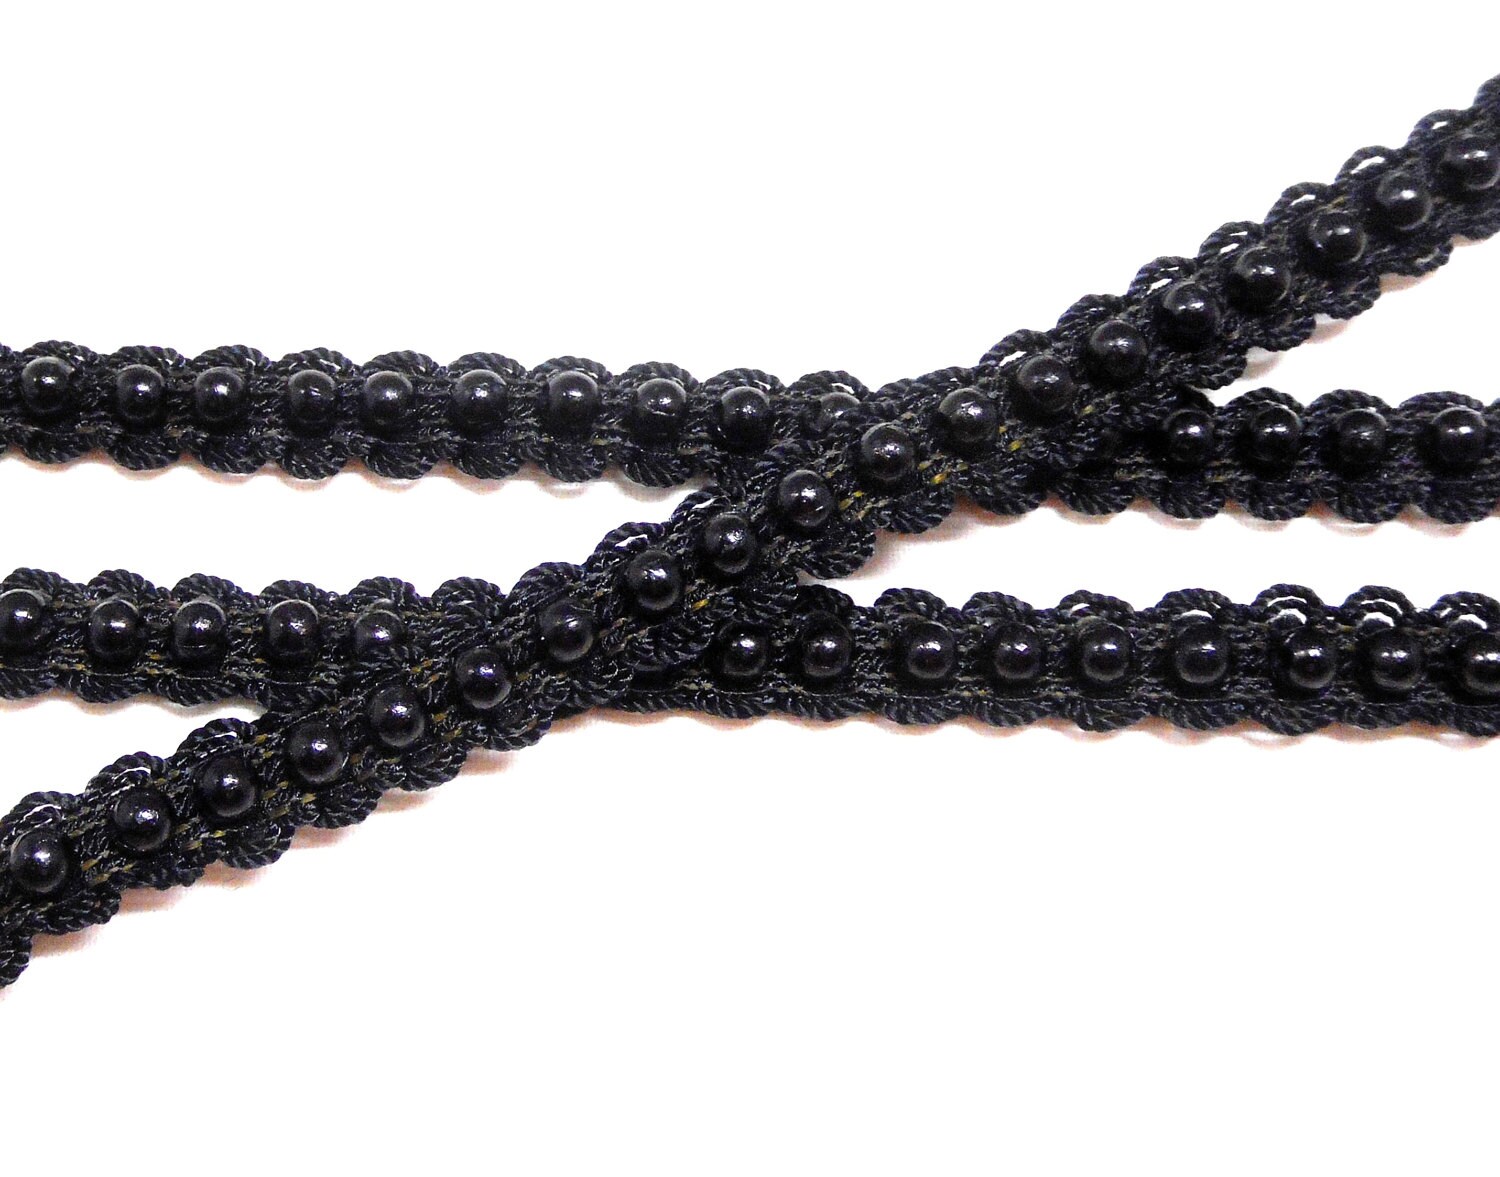 190 Yards 1.1mm Black Elastic Jewelry Cord Stretch String Bracelet Beading  Thread